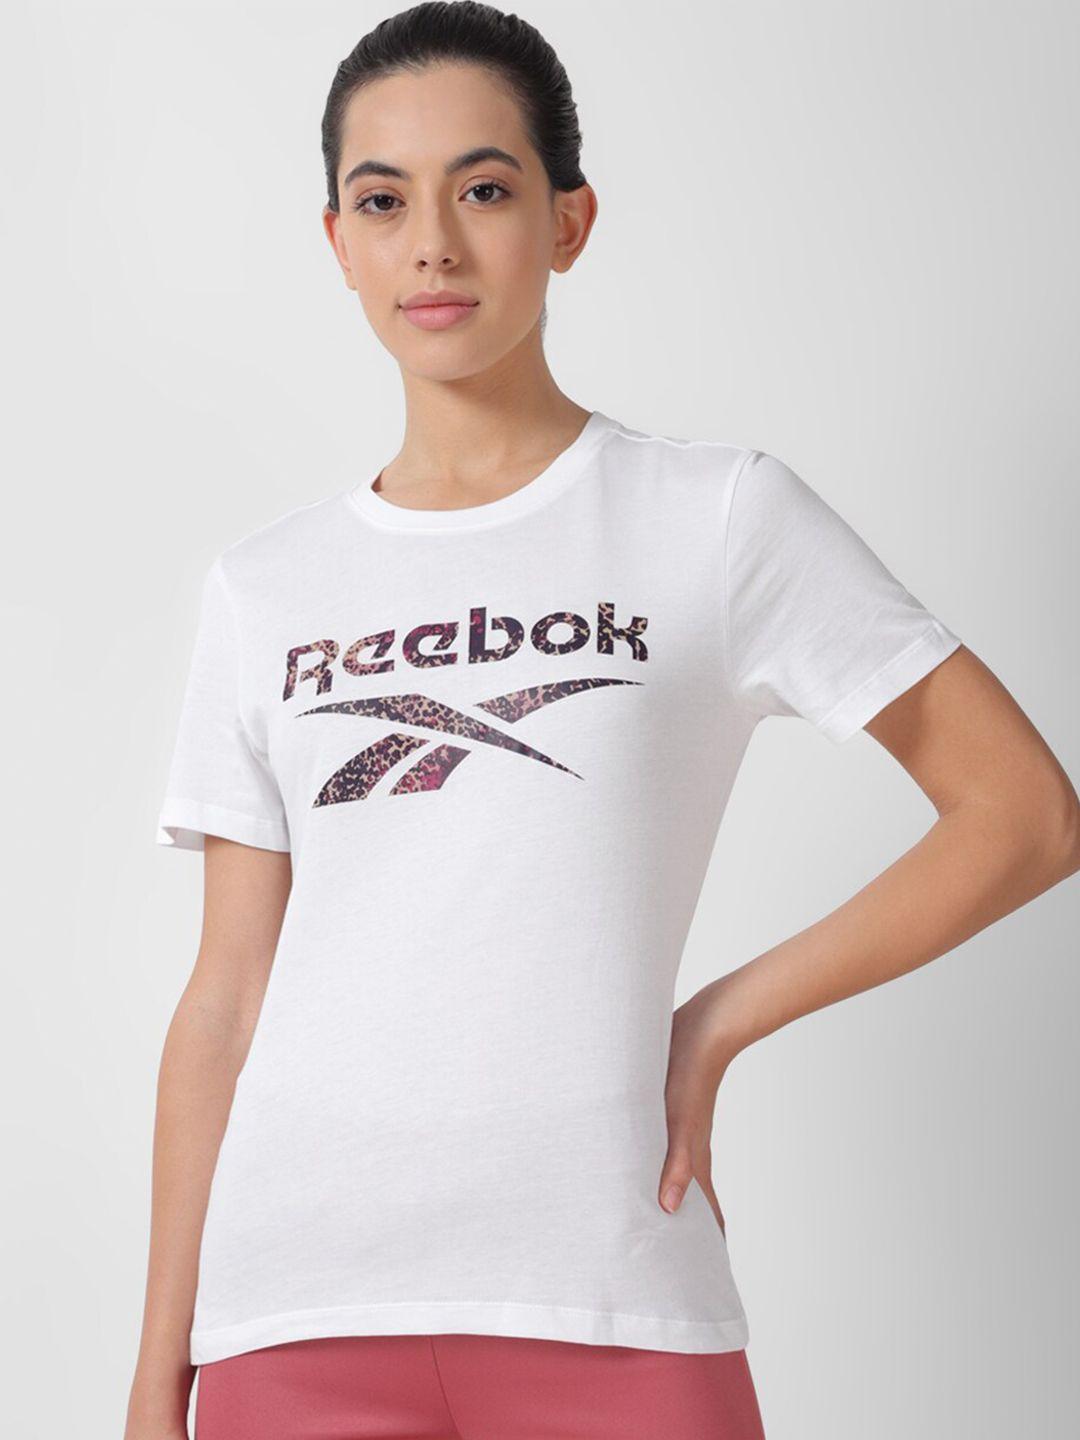 reebok brand logo printed pure cotton t-shirt